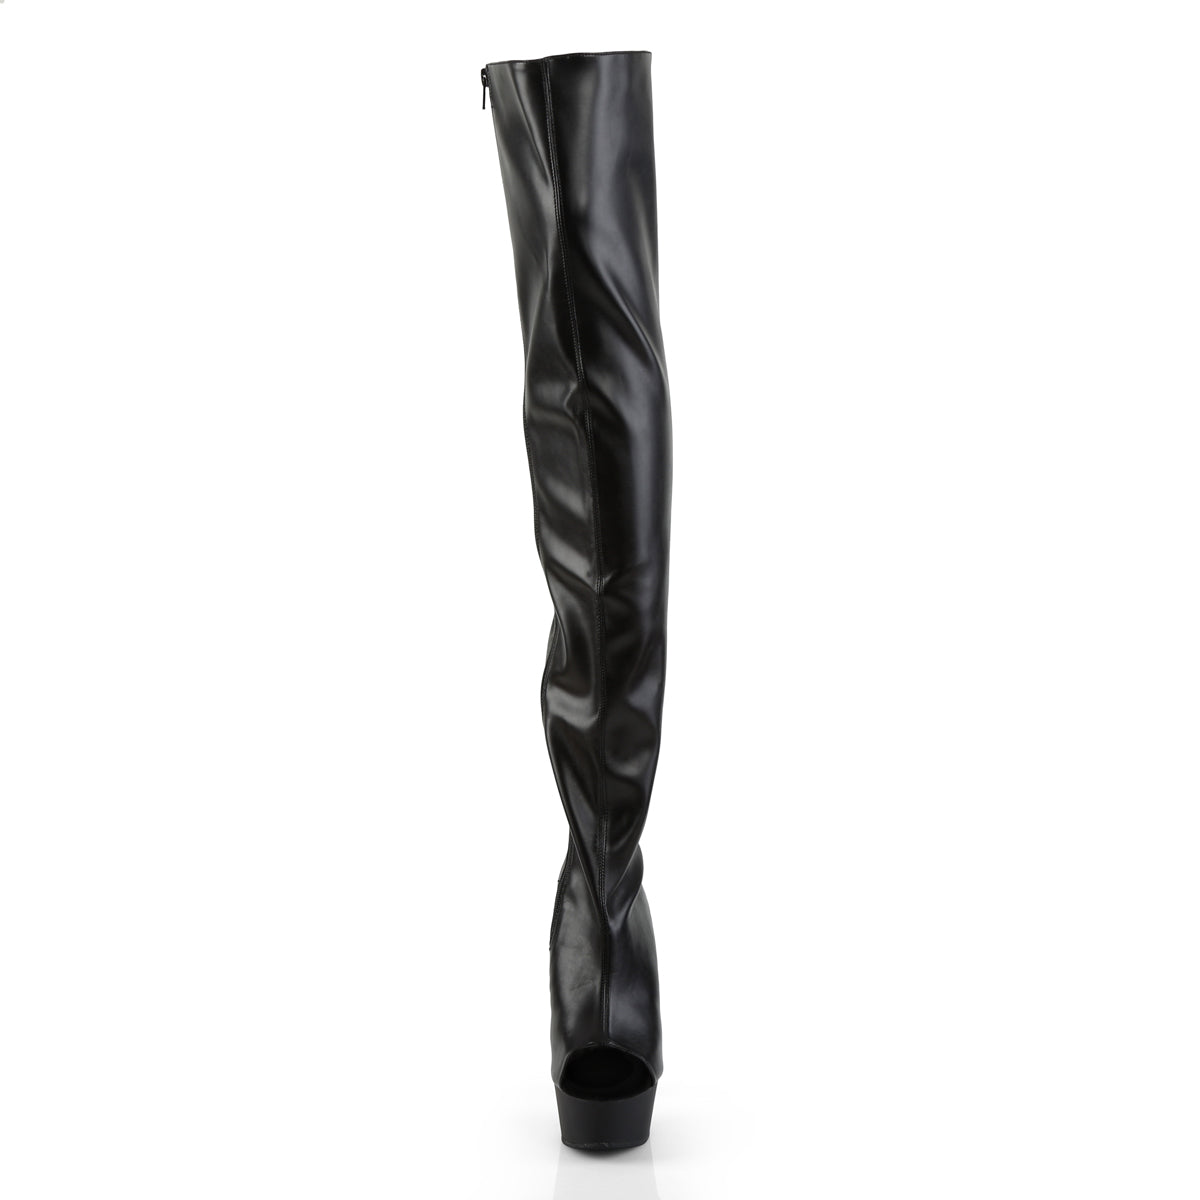 DELIGHT-3017 Pleaser 6 Inch Heel Black Pole Dancer Platforms-Pleaser- Sexy Shoes Alternative Footwear